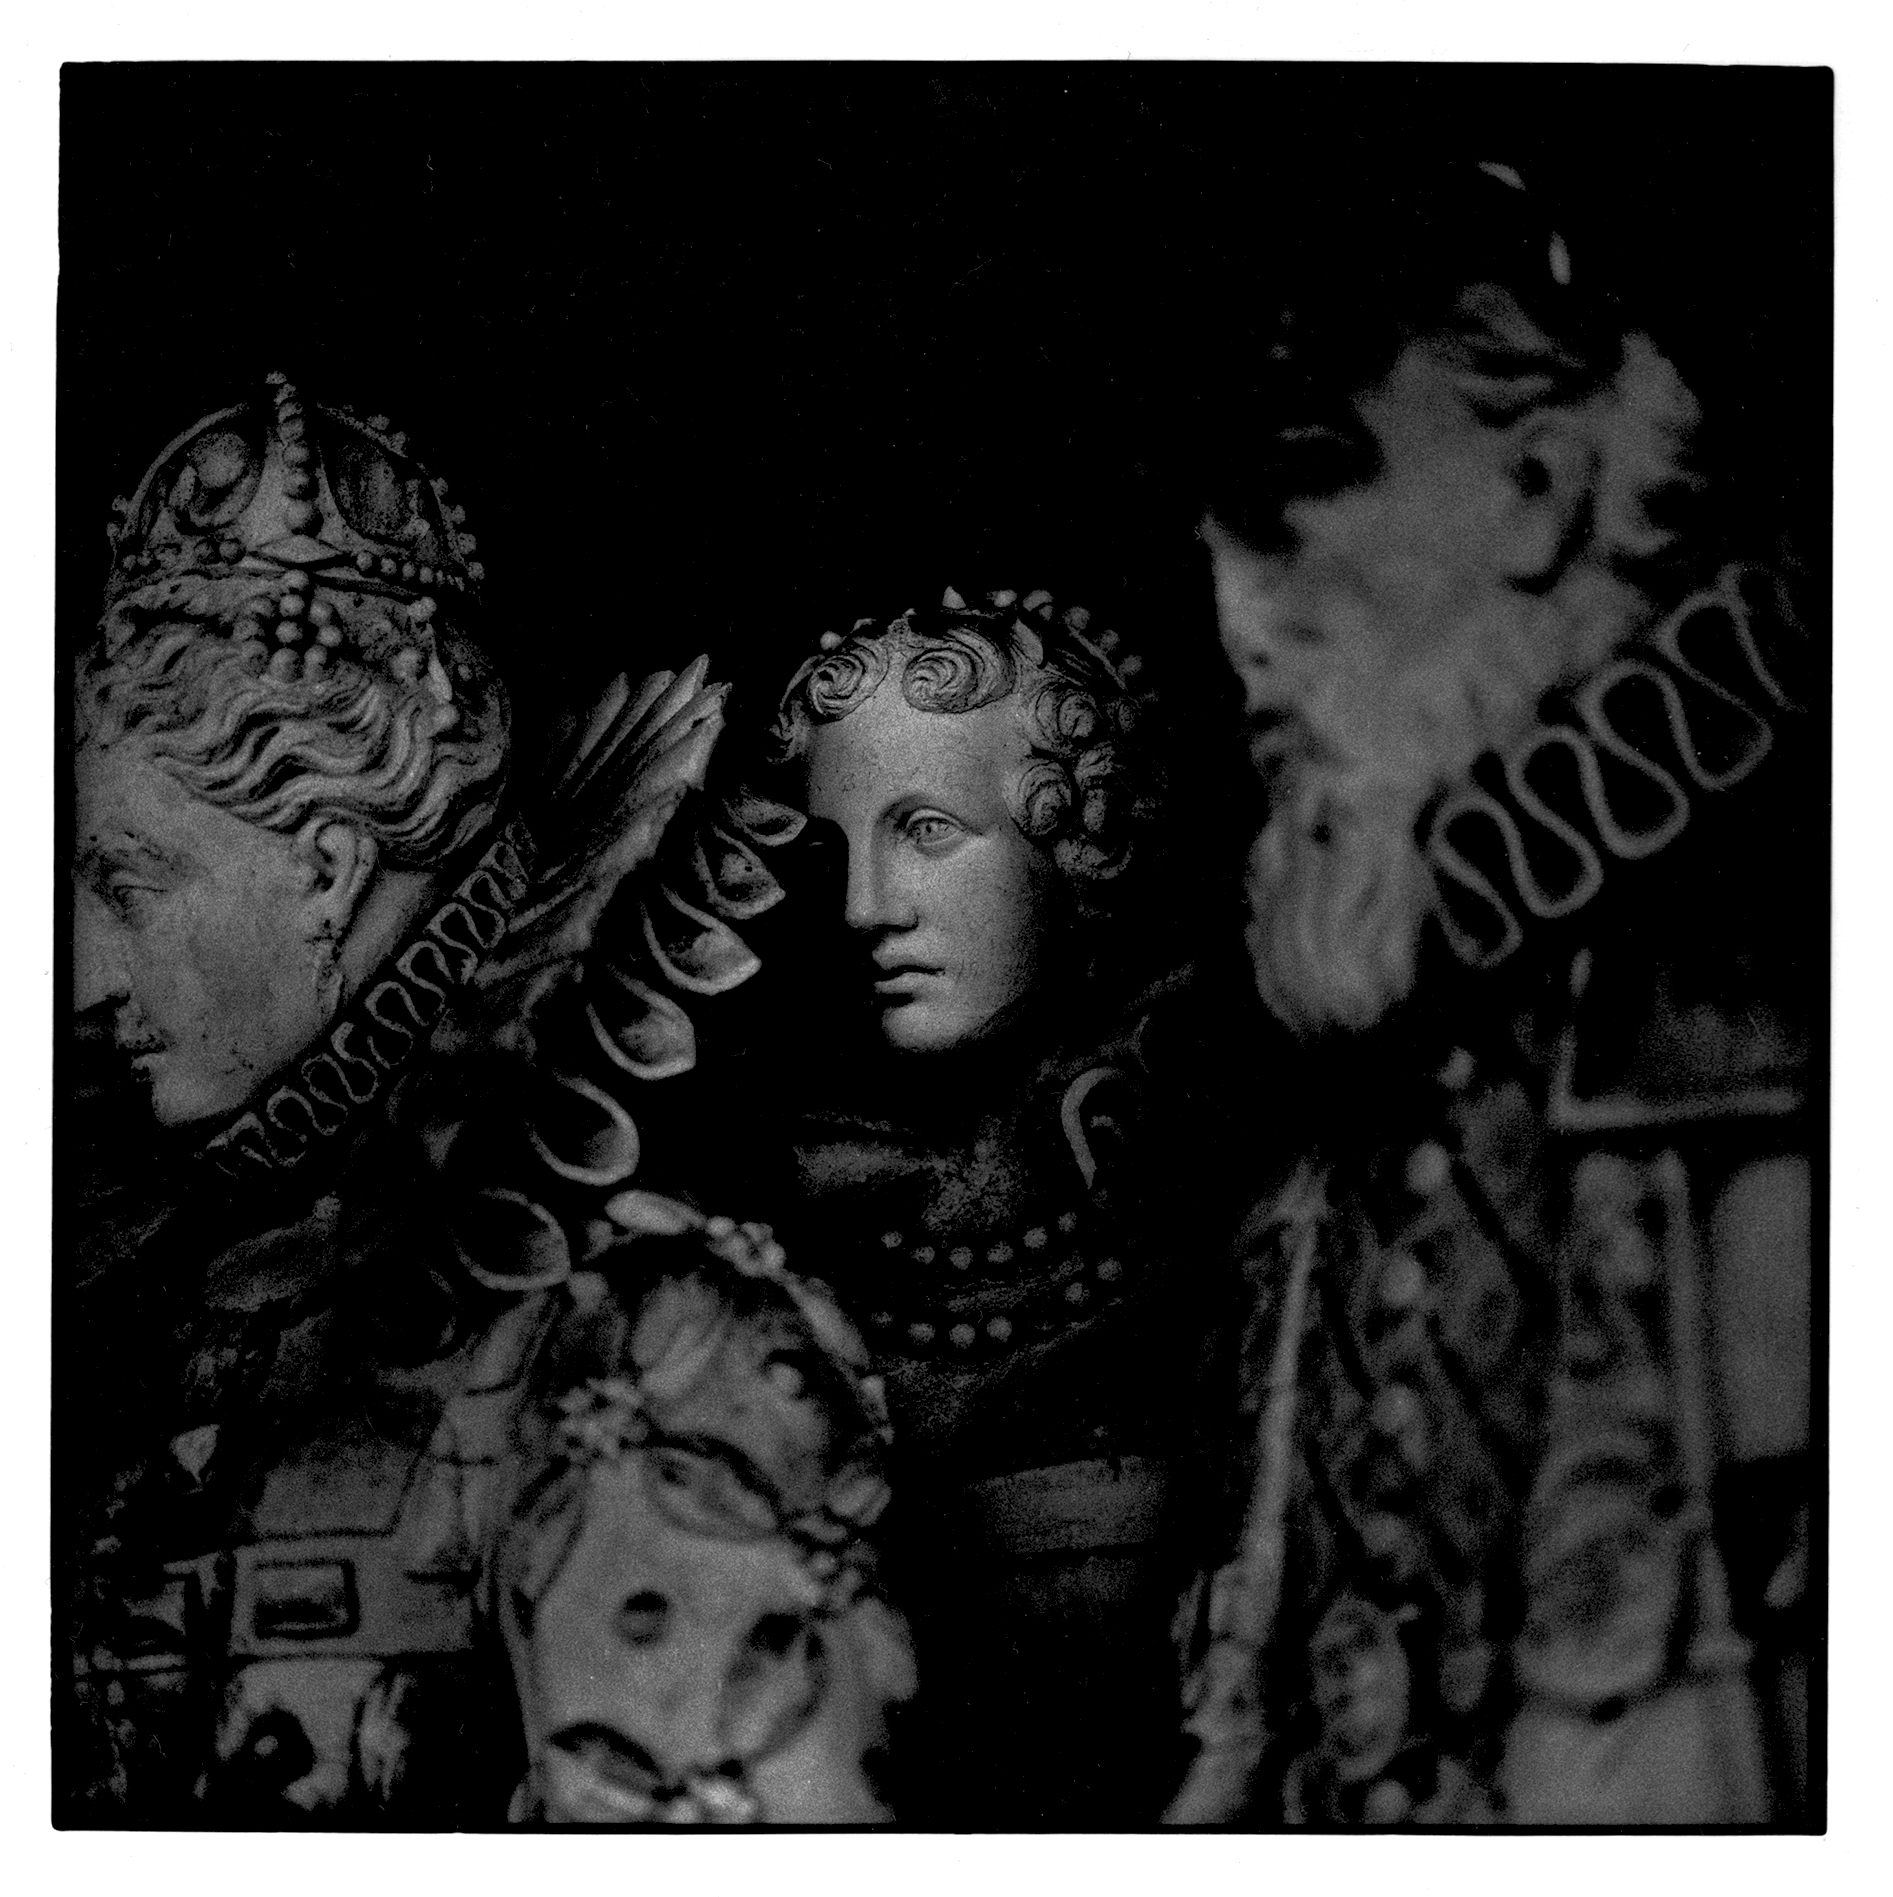 hatfield house, slawekdejneka.com; darkroom prints